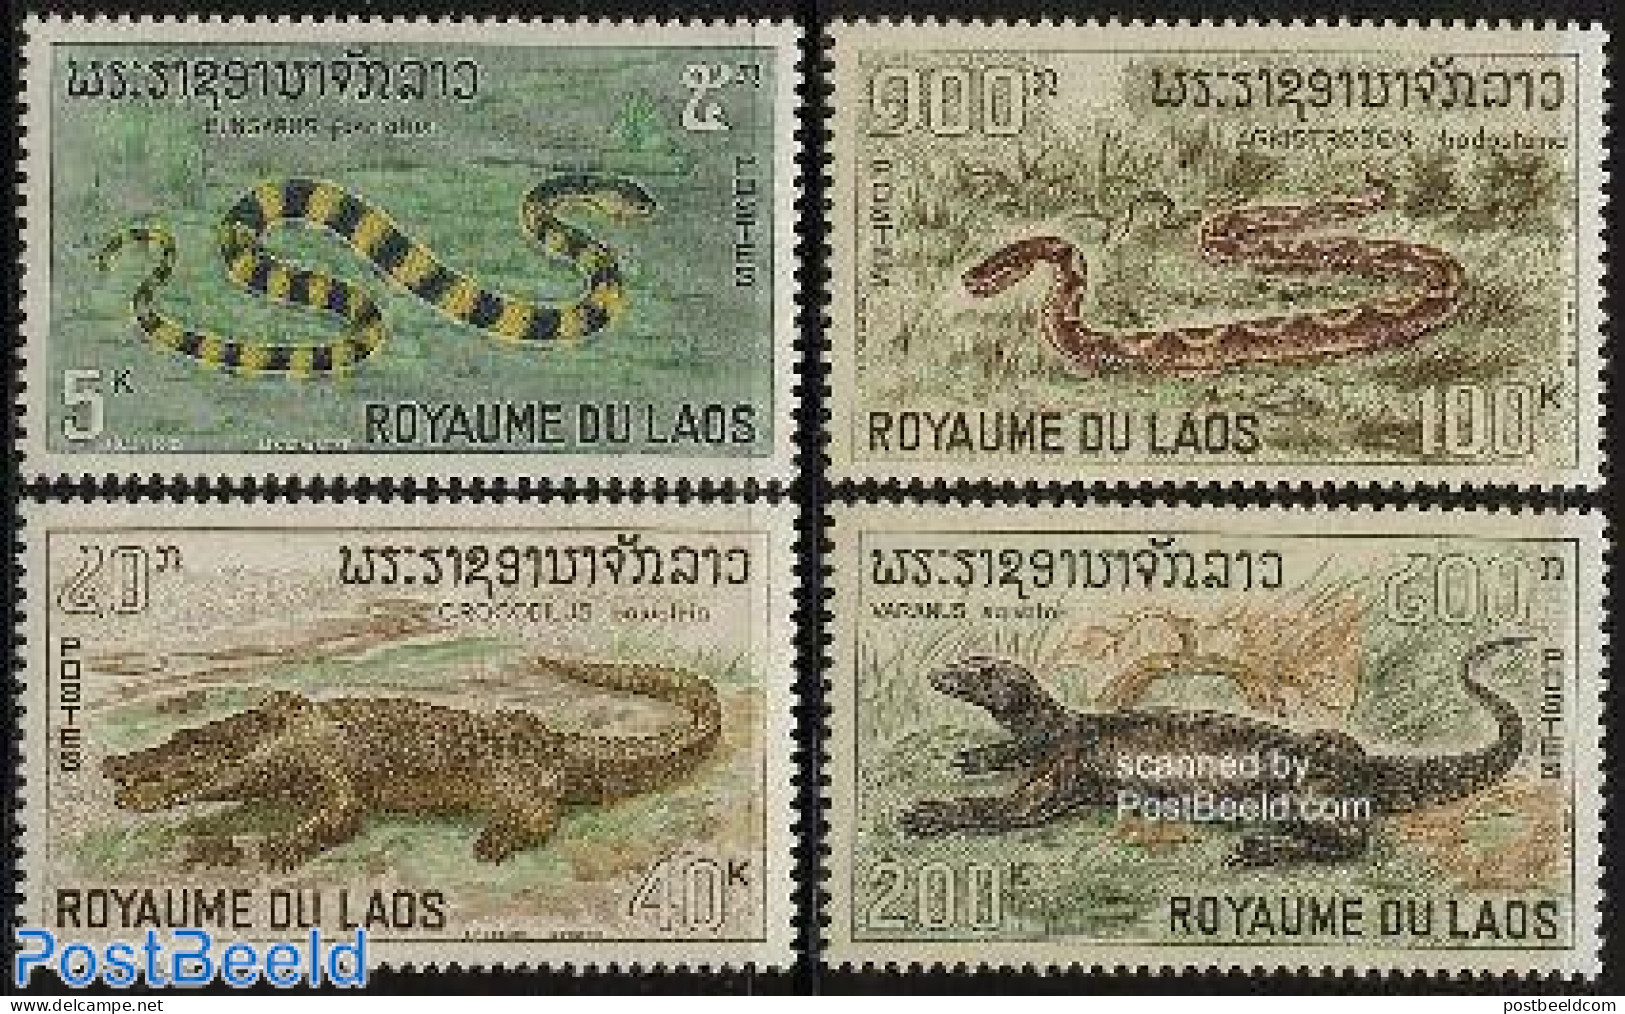 Laos 1967 Reptiles 4v, Mint NH, Nature - Crocodiles - Reptiles - Snakes - Laos